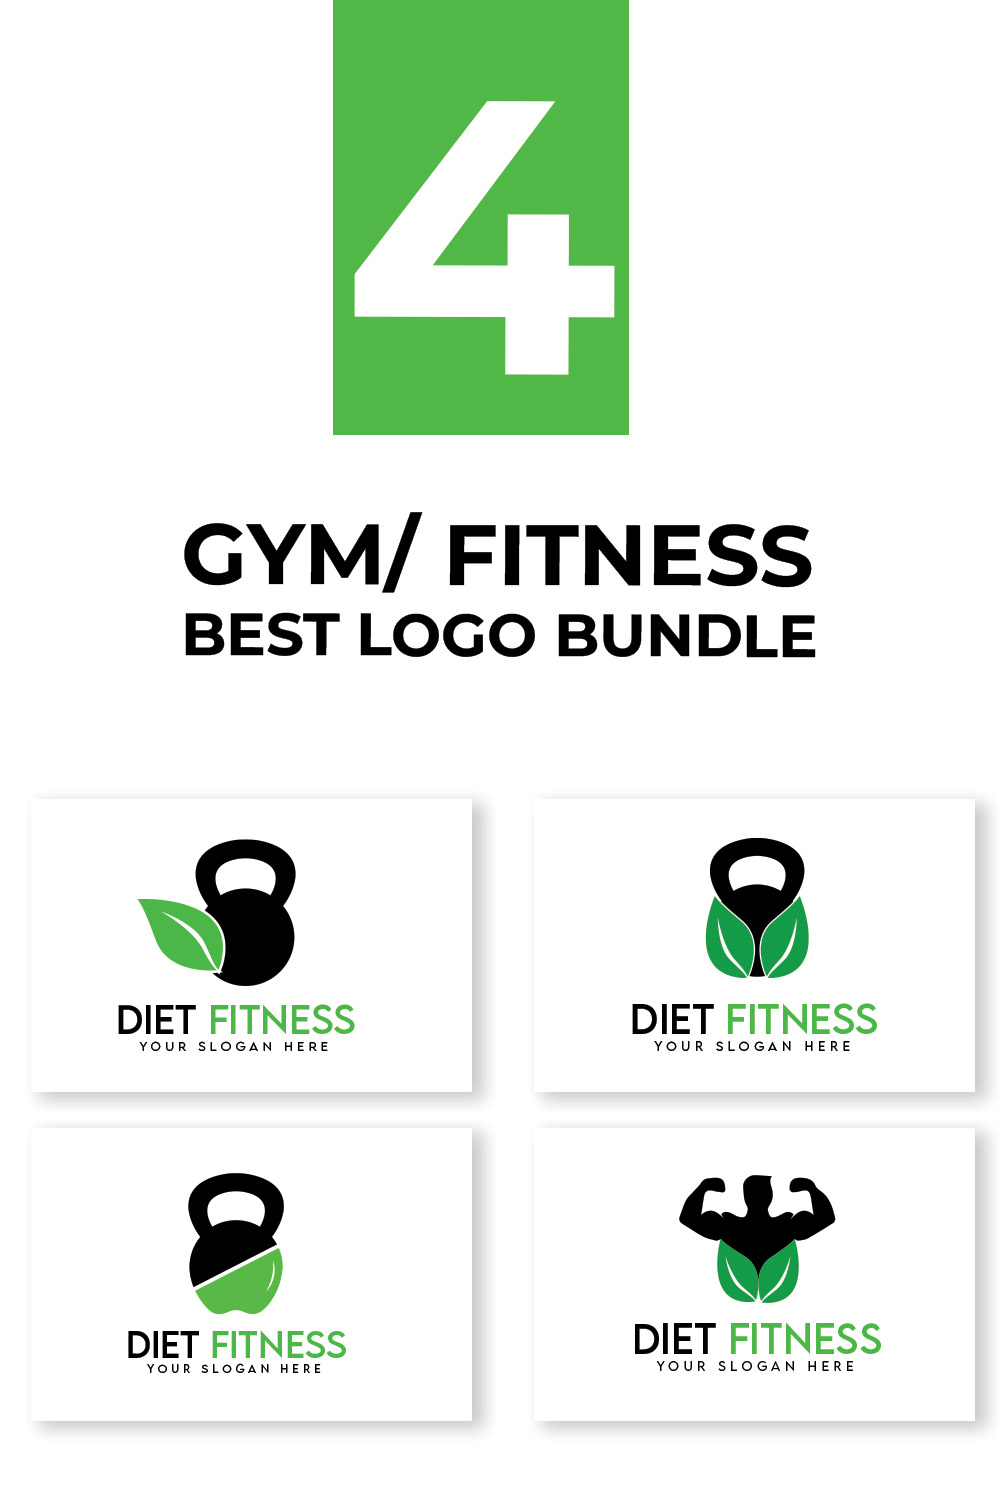 Diet Fitness Logo Template pinterest image.